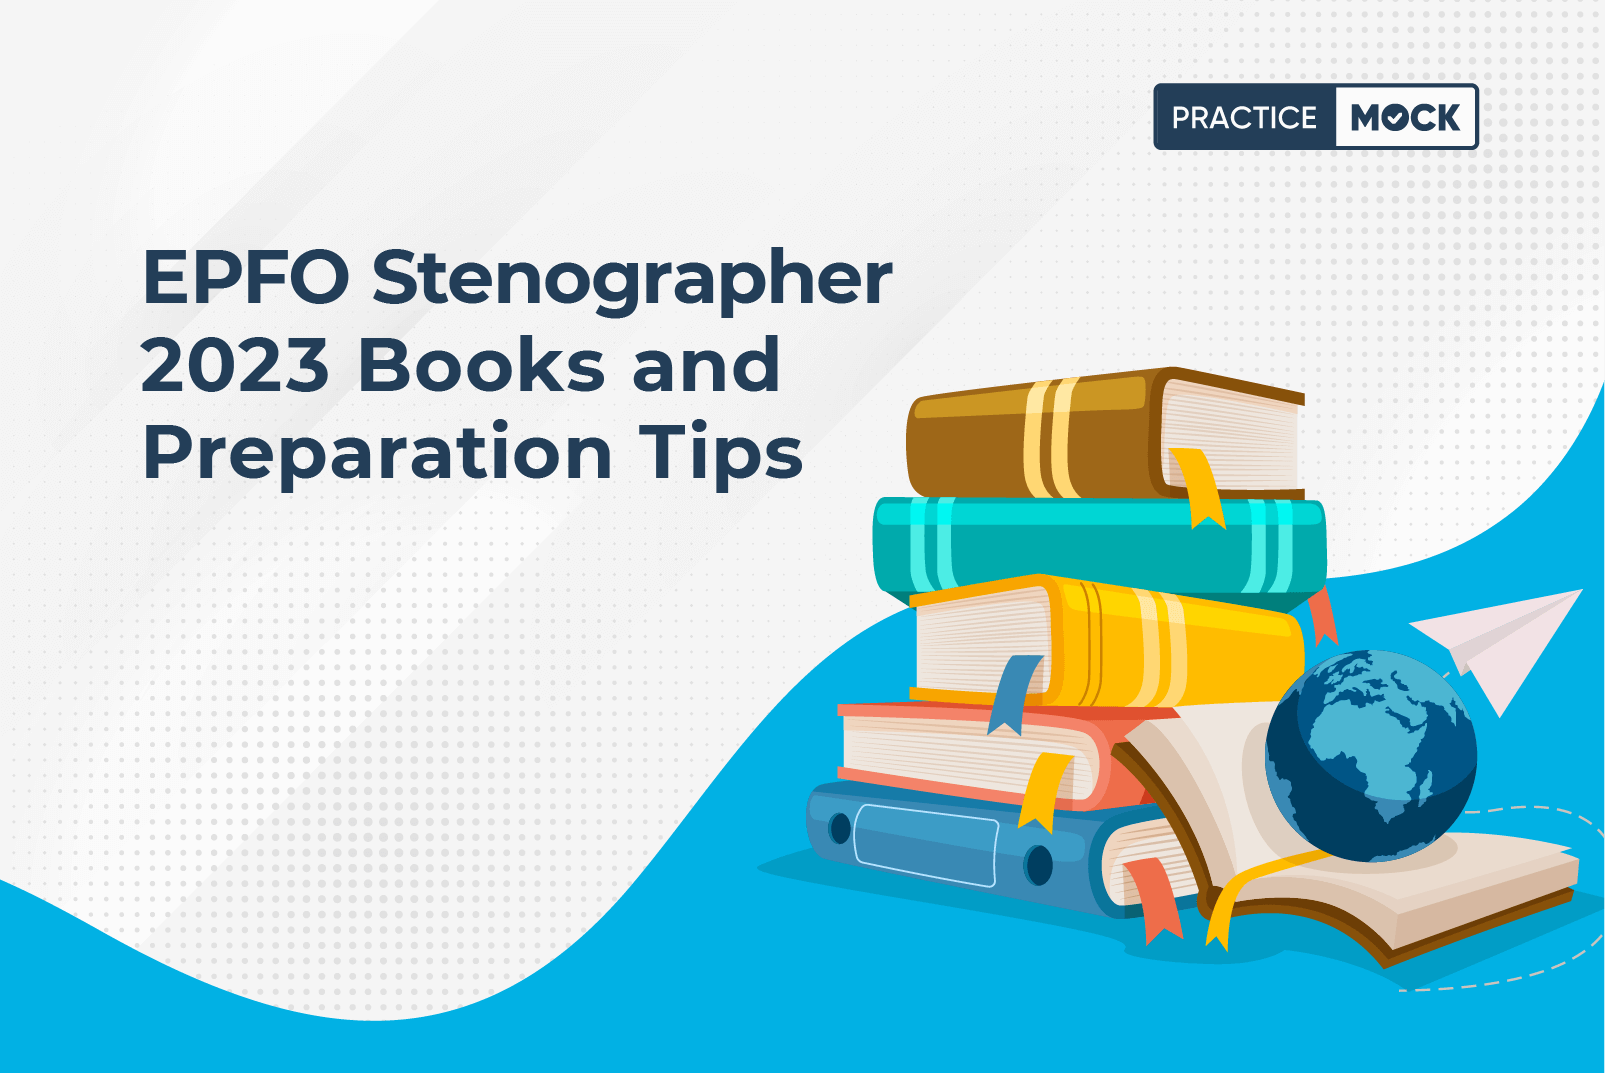 EPFO Stenographer preparation books